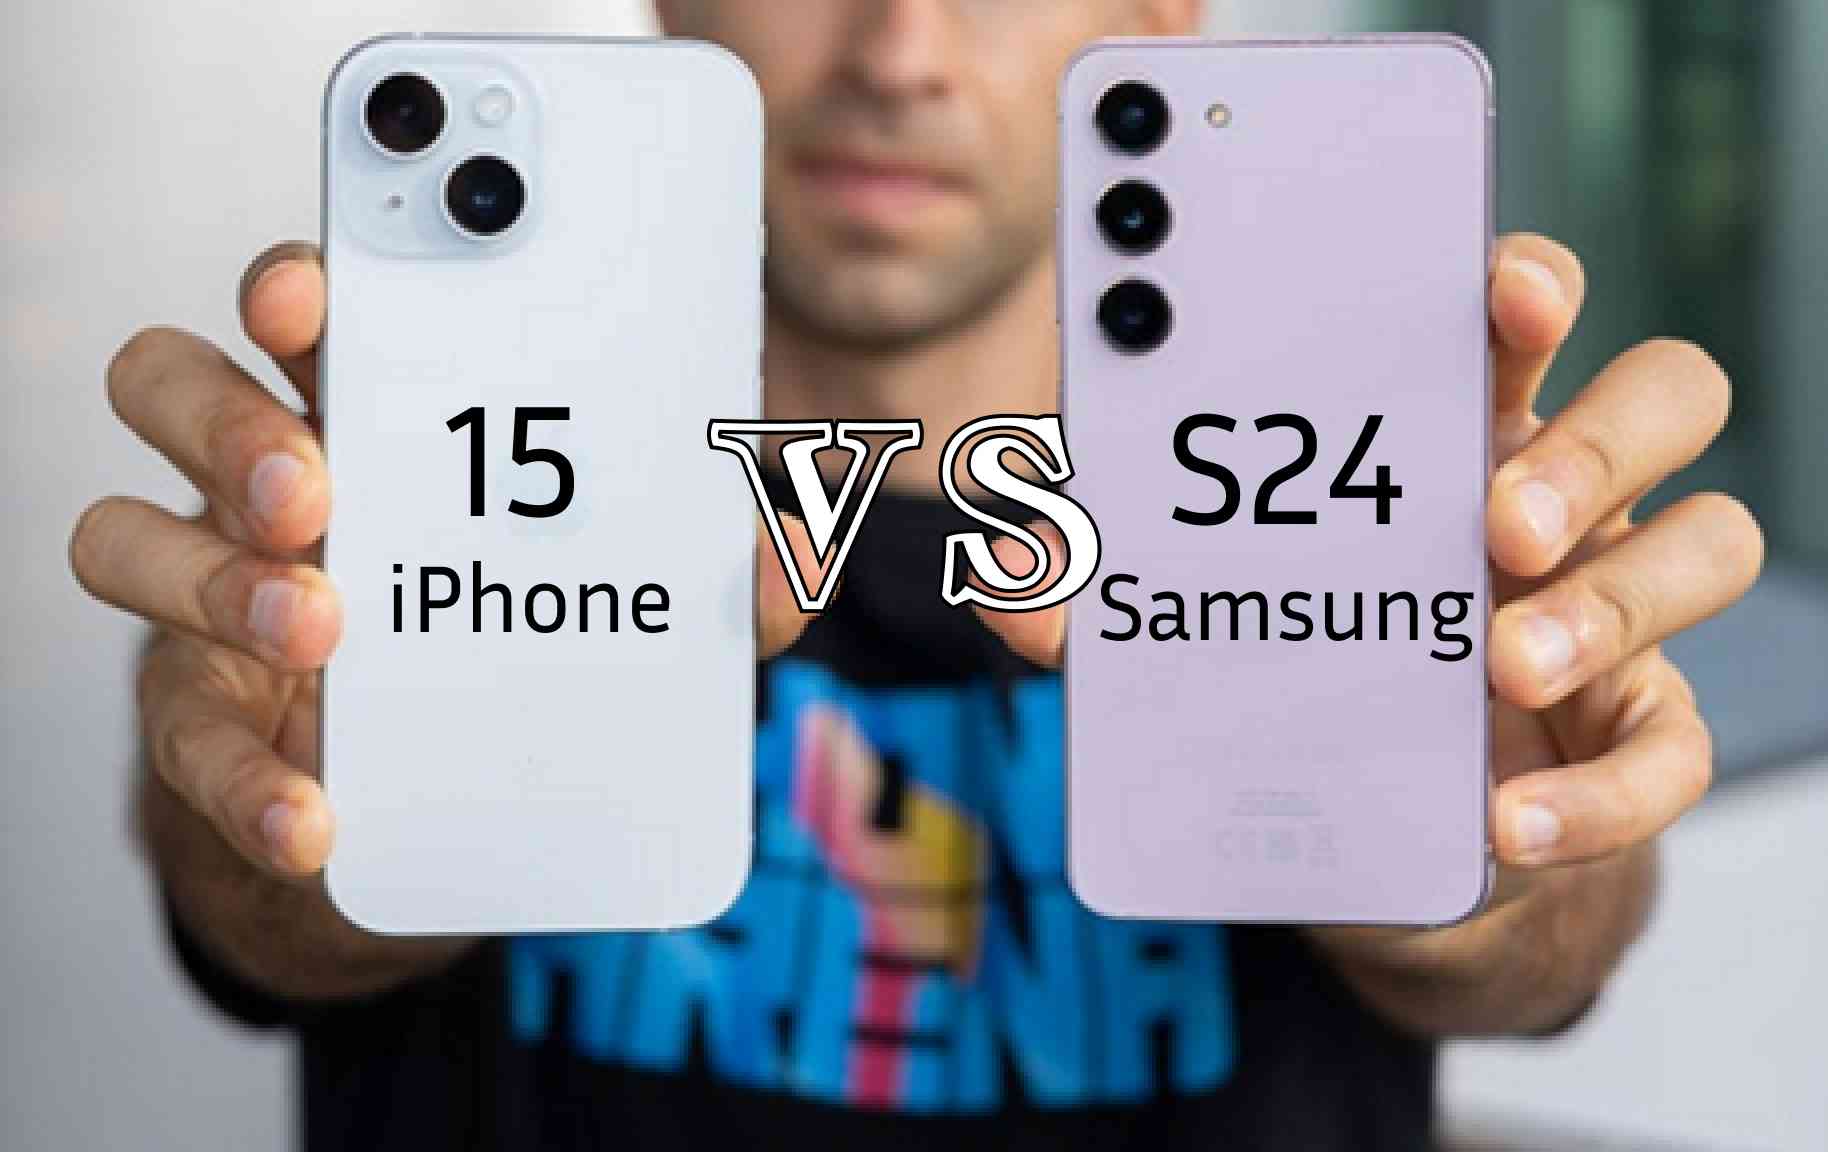 iPhone 15 vs. Samsung S24: Who Will Win?